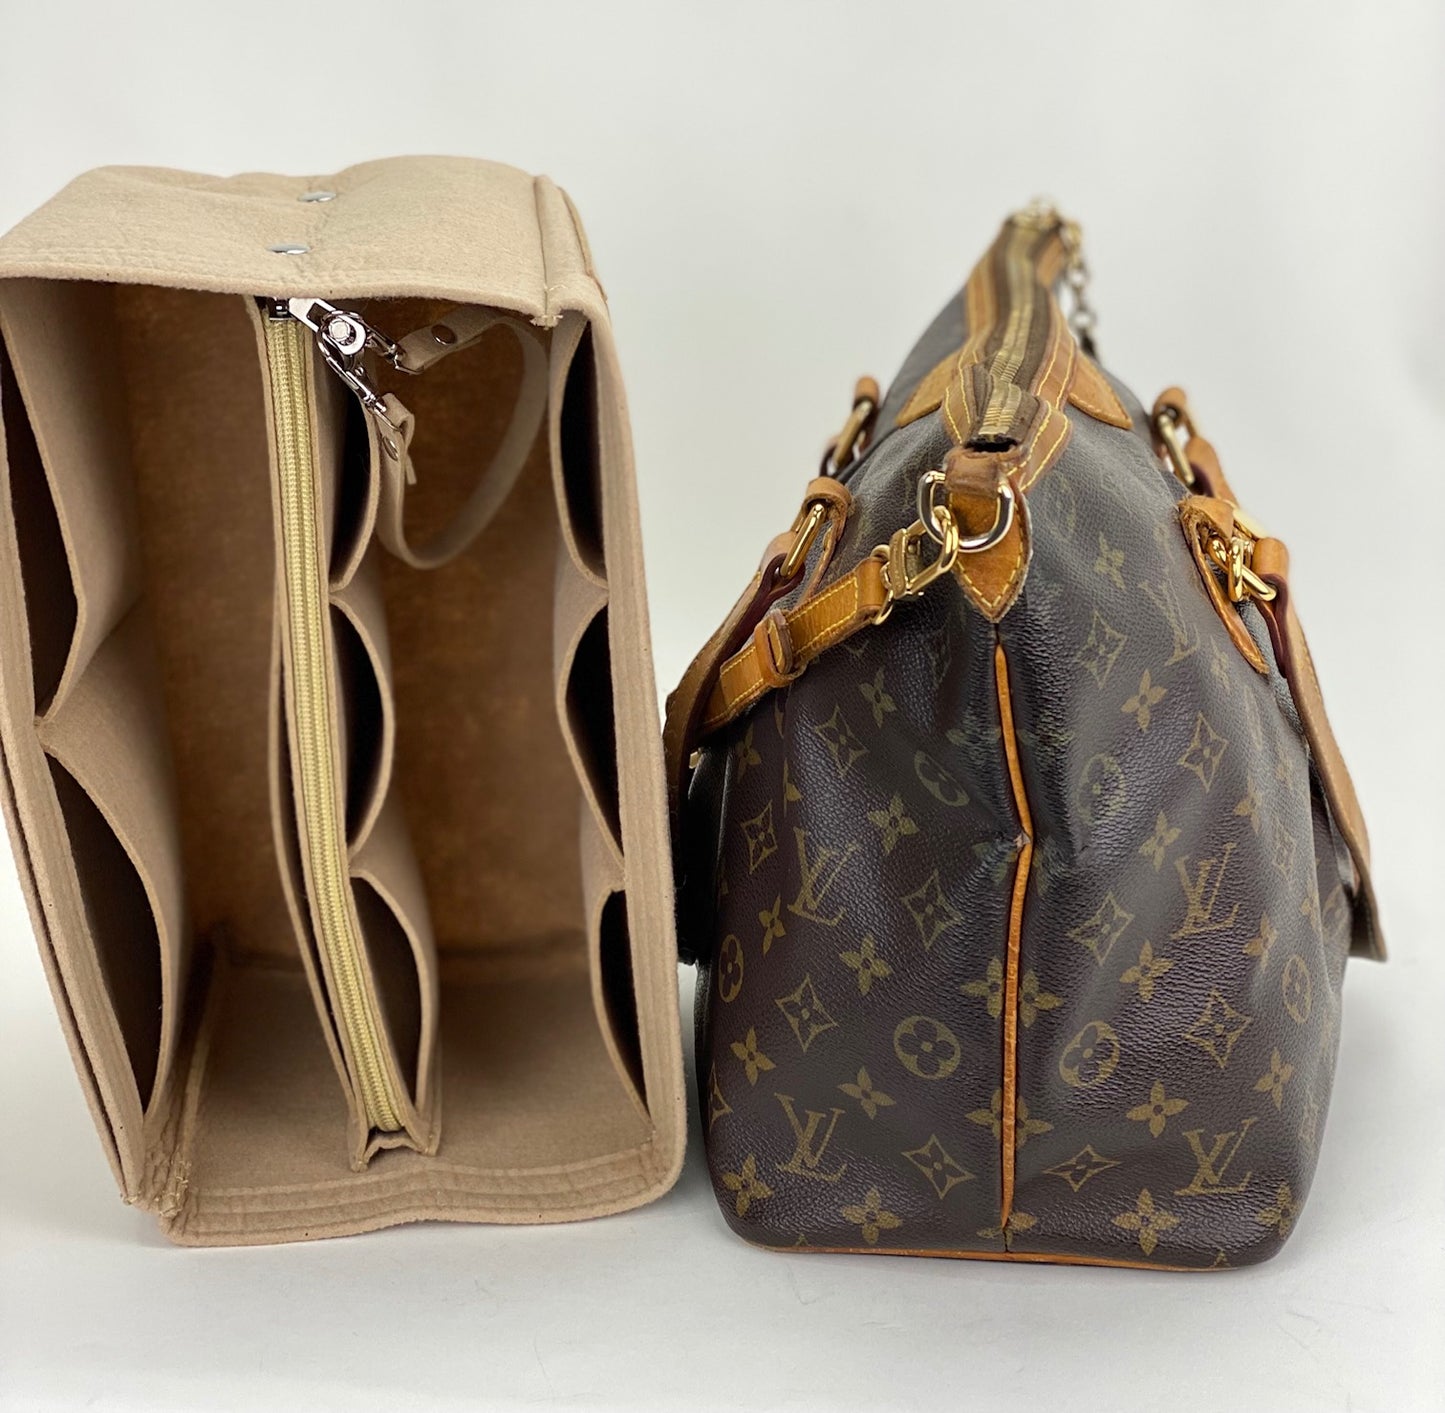 Used Louis Vuitton Tote Bag /Pvc/Brw/Total Pattern/M40145